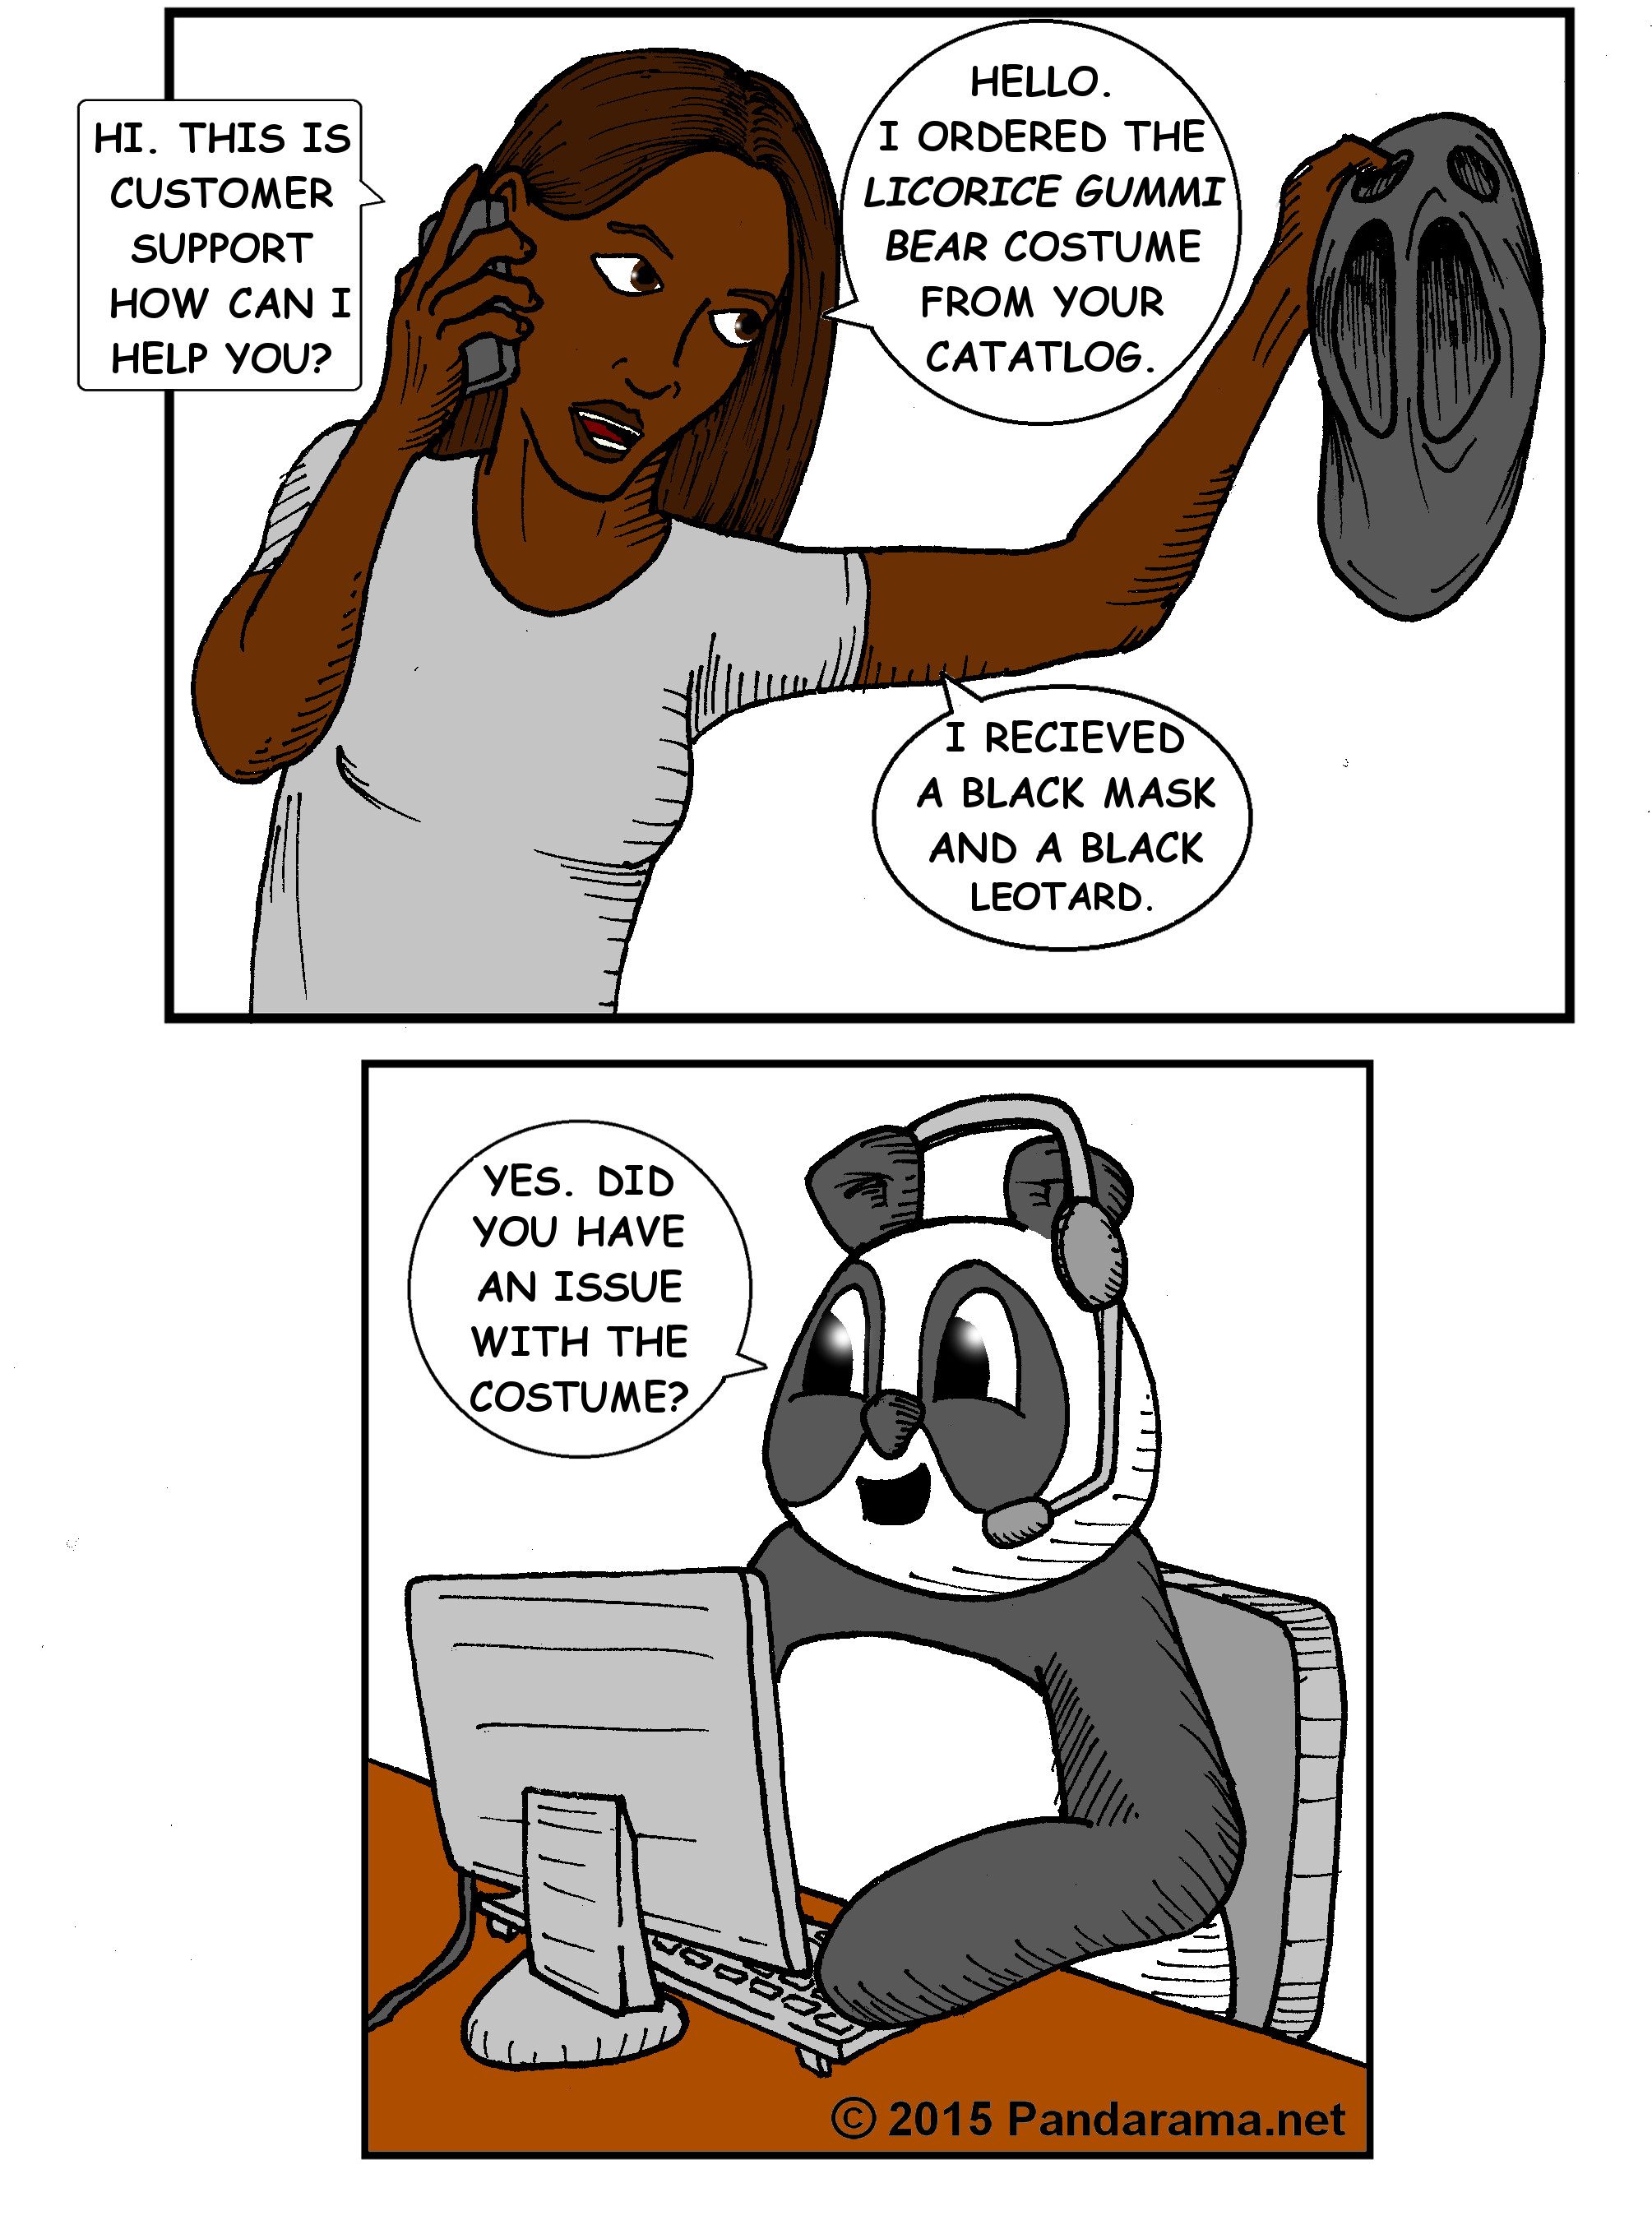 Pandarama / Pandarama.net cartoon of a panda fielding a customer service call about a licorice gummibear costume.